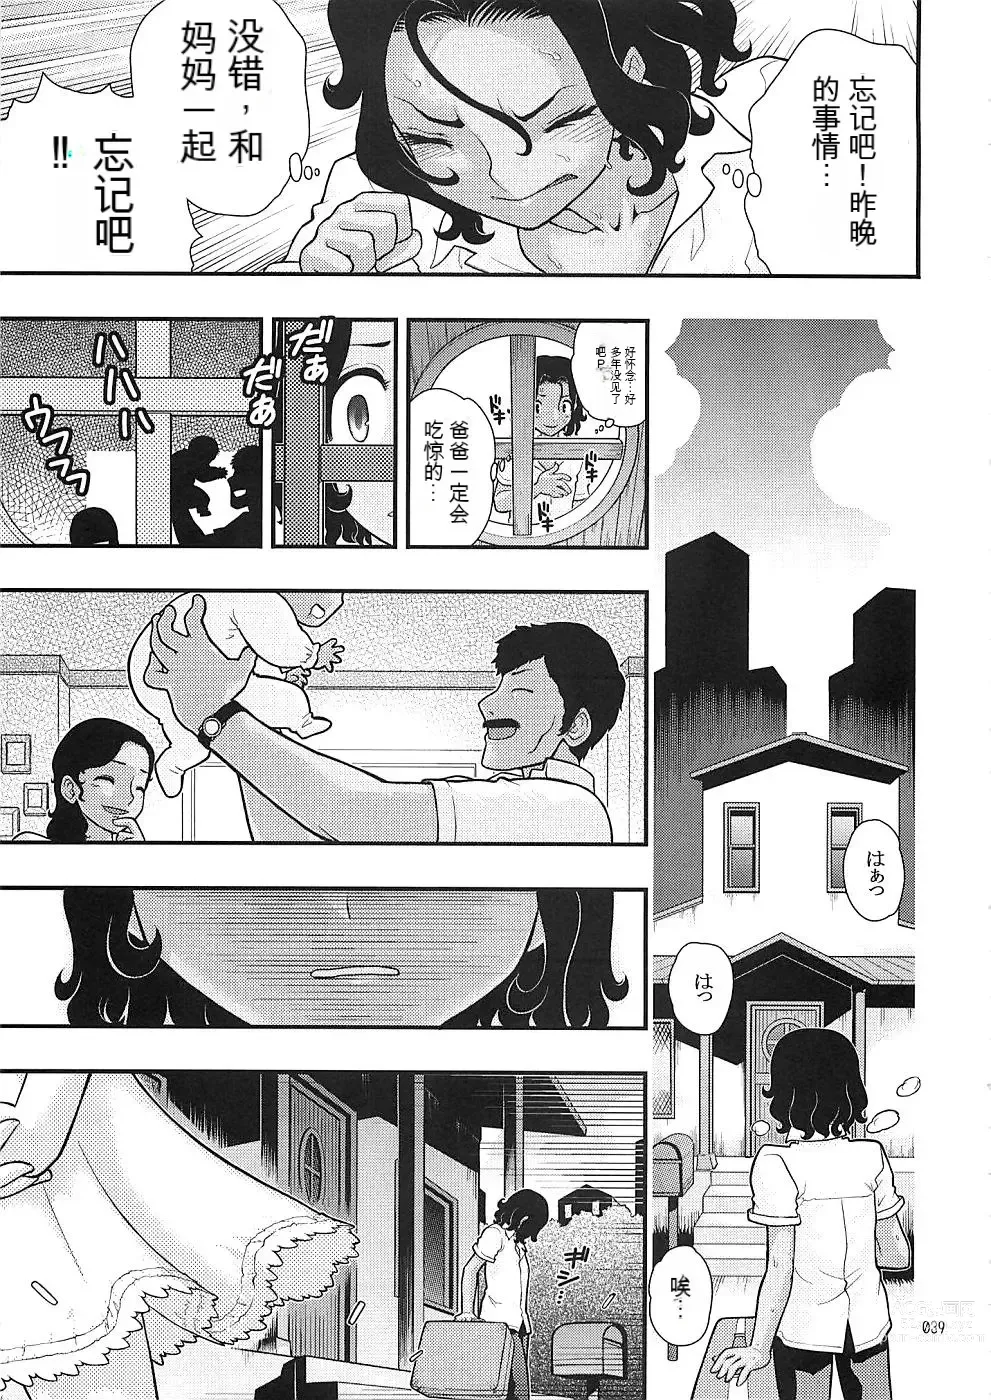 Page 11 of doujinshi Endless Summer Vacation